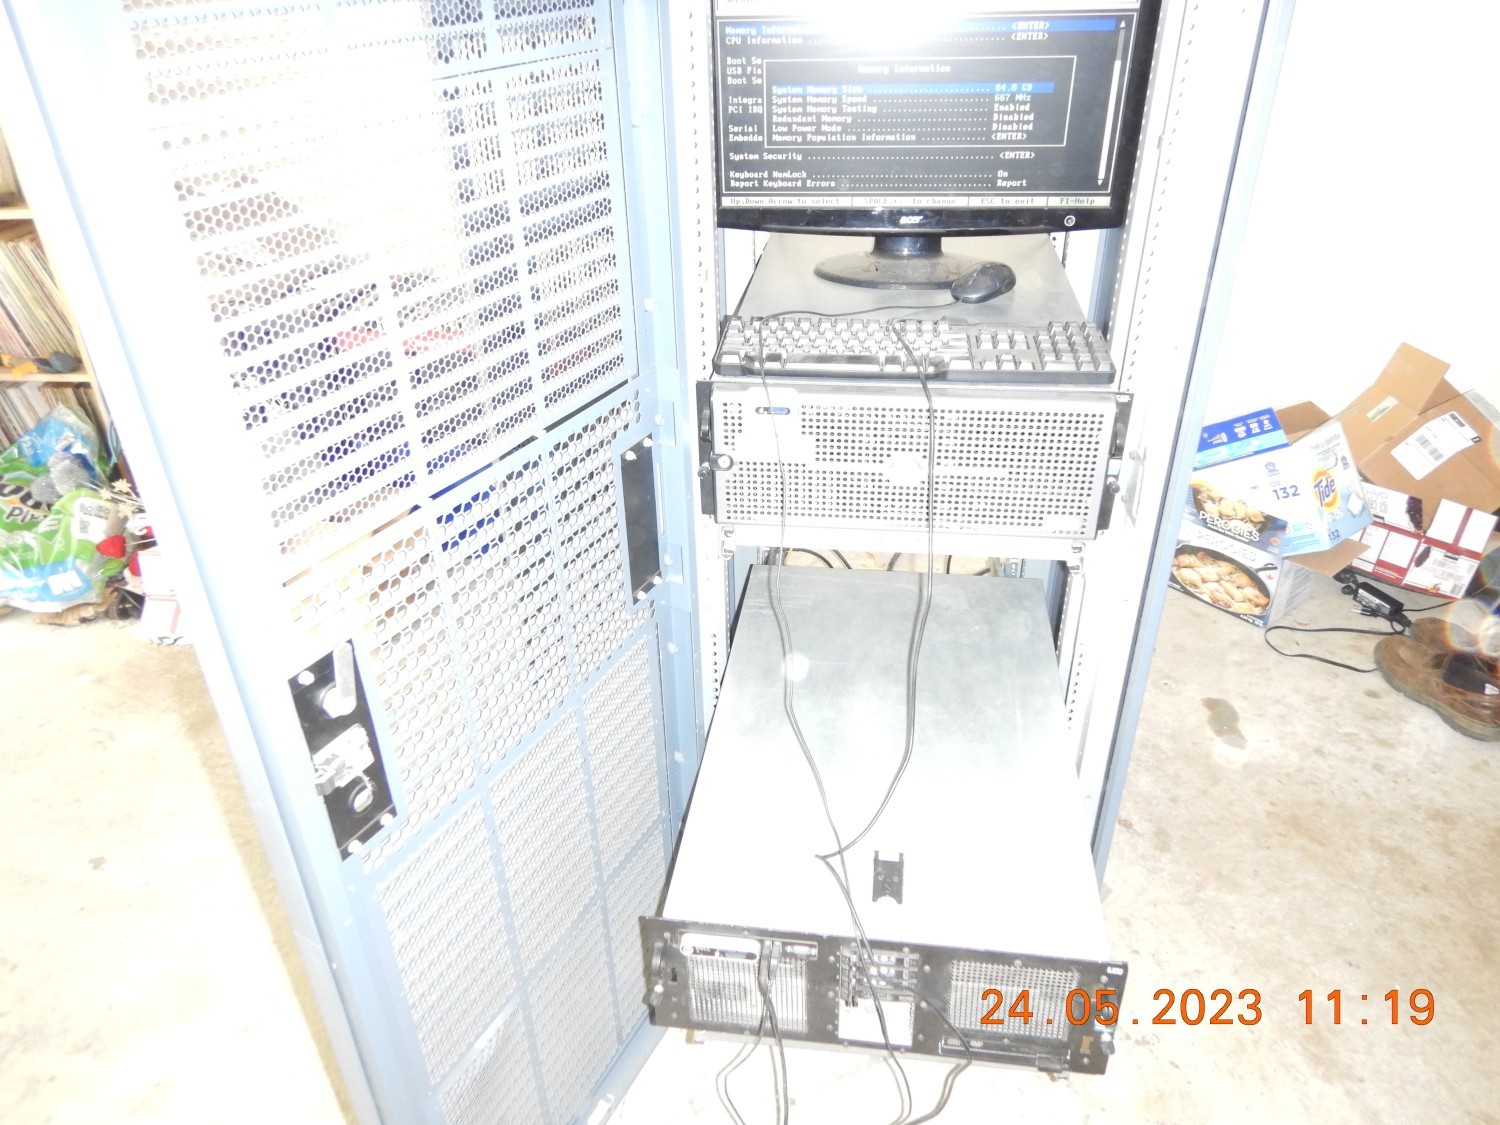 2-x-dell-r900-4-x-4-16-core-zeon-servers-digital-server-rack-3000-watt-powerware-ups-with-new-batteries-may-2022-big-13